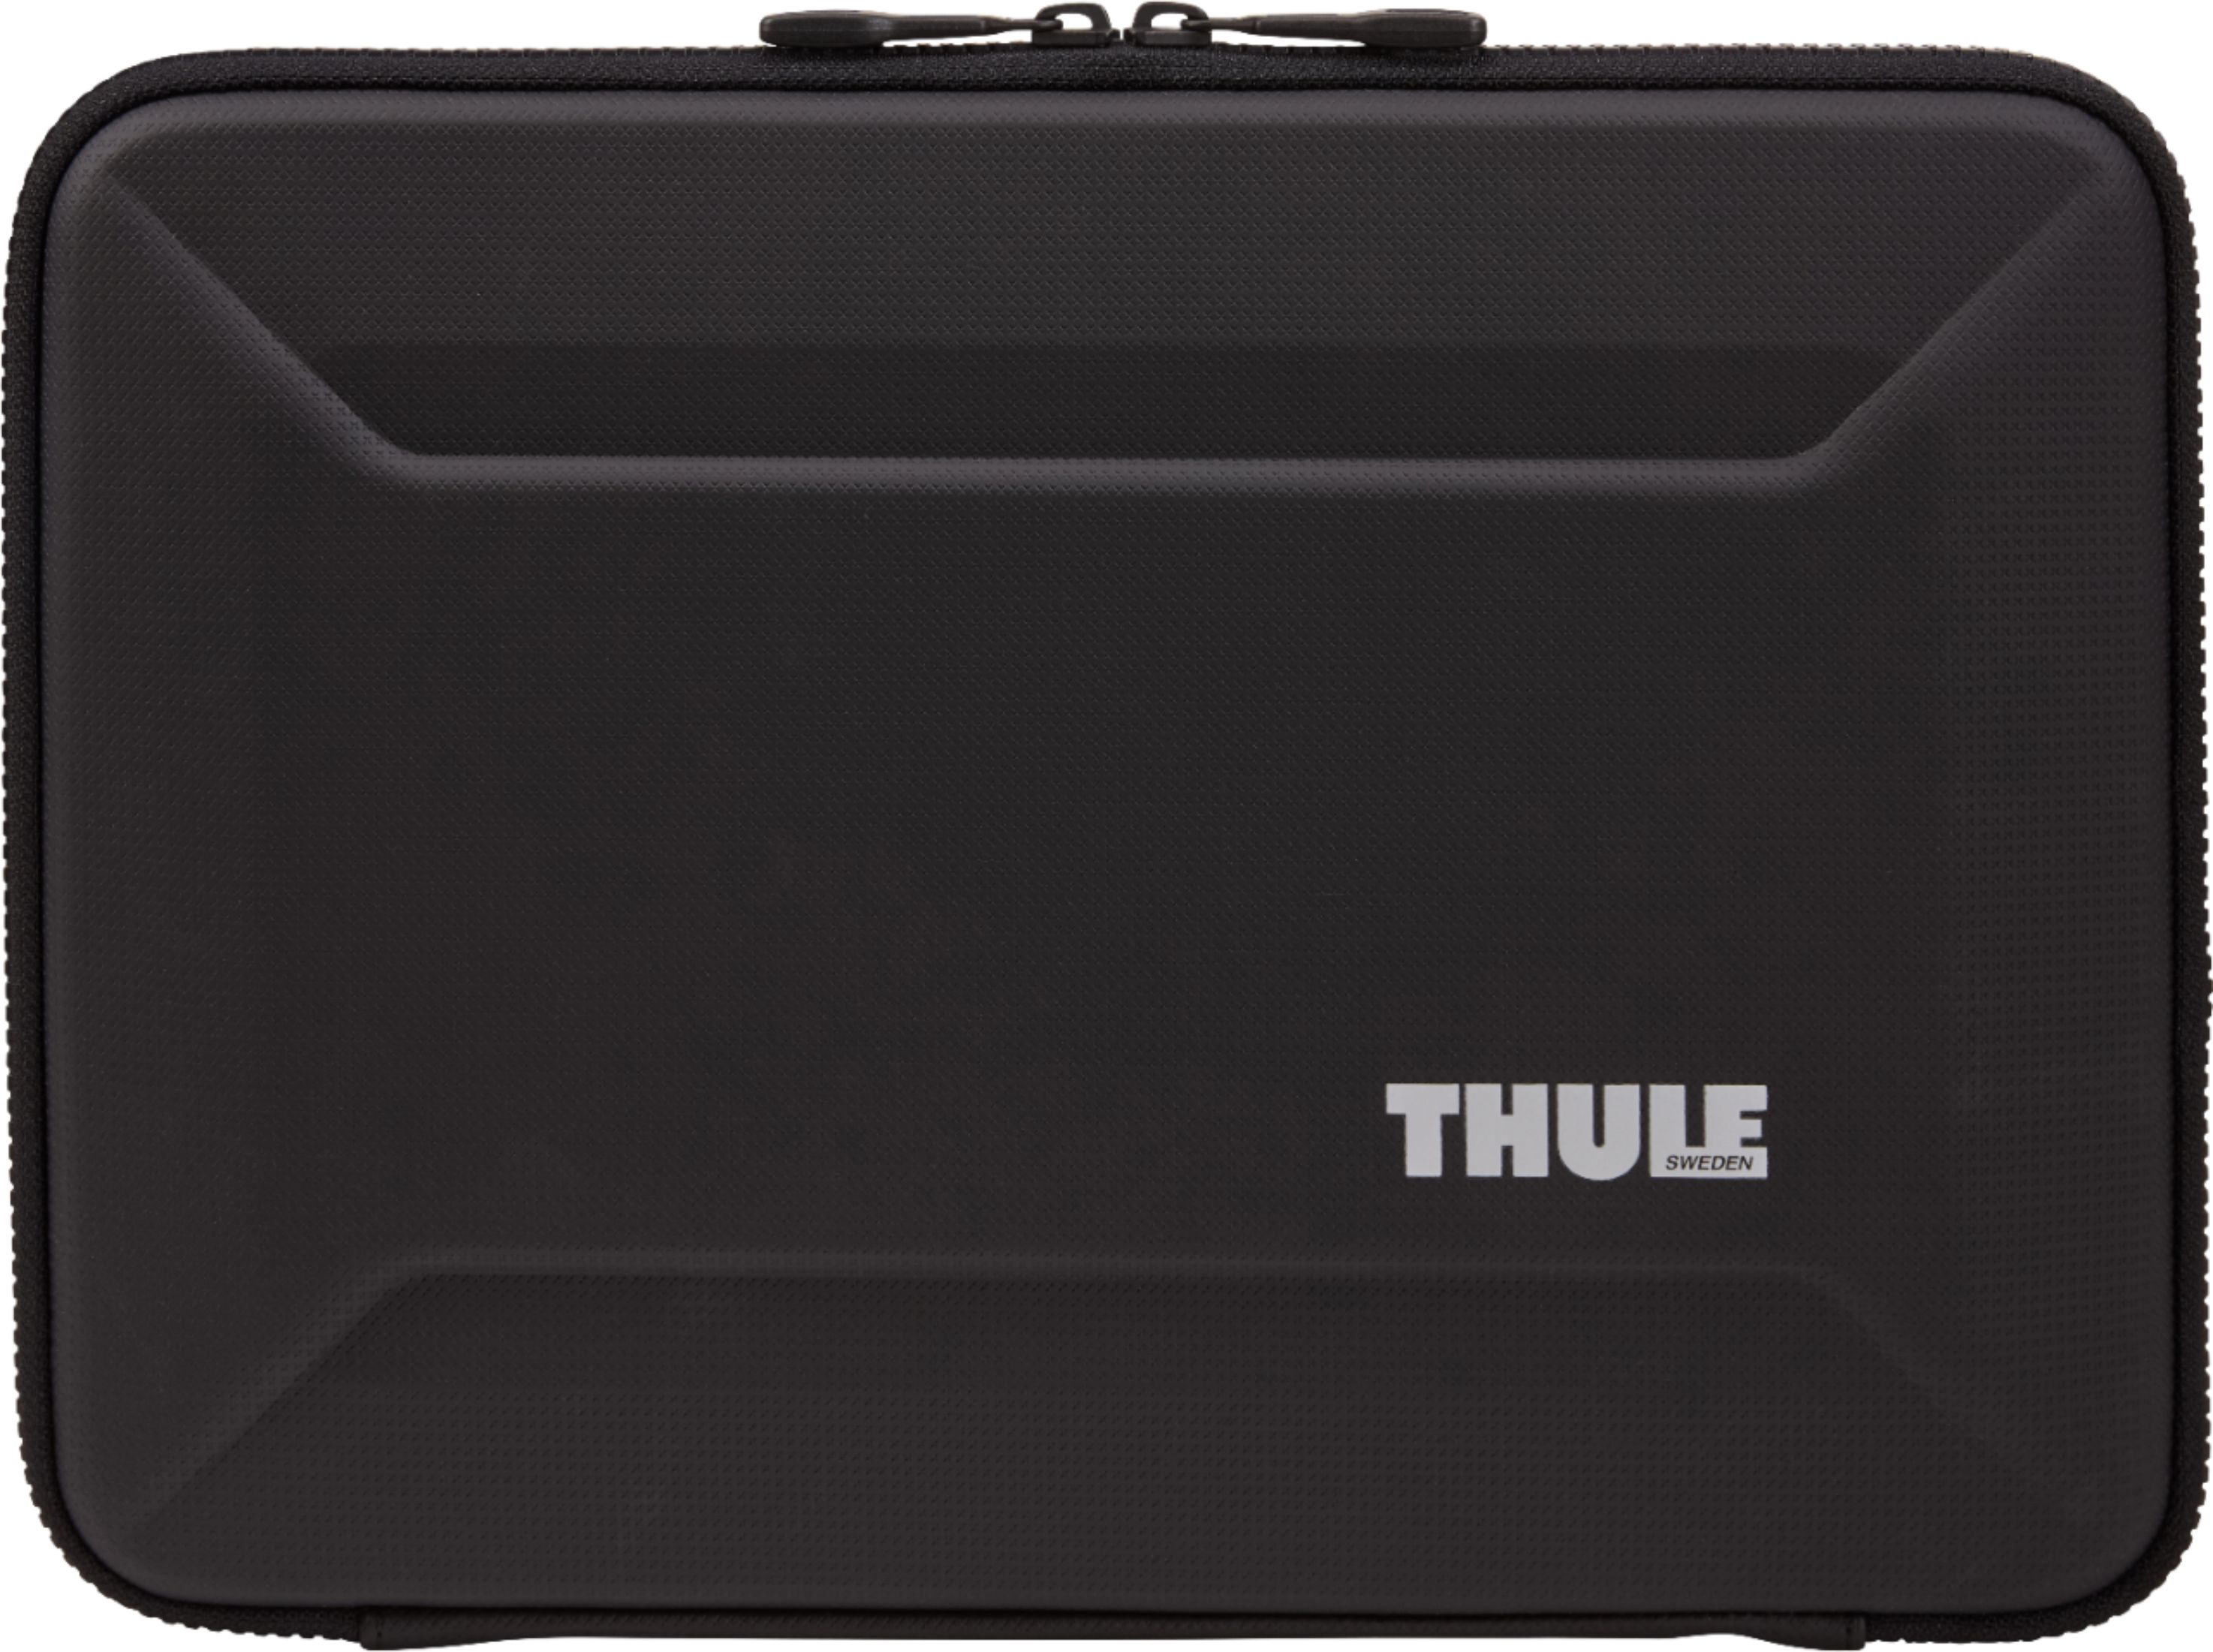 Thule - Gauntlet 4.0 Sleeve/Case for 13”/13.3” Apple MacBook Pro, 13”/13.3” Apple MacBook Air, PCs/Laptops & Tablets up to 12” - Black